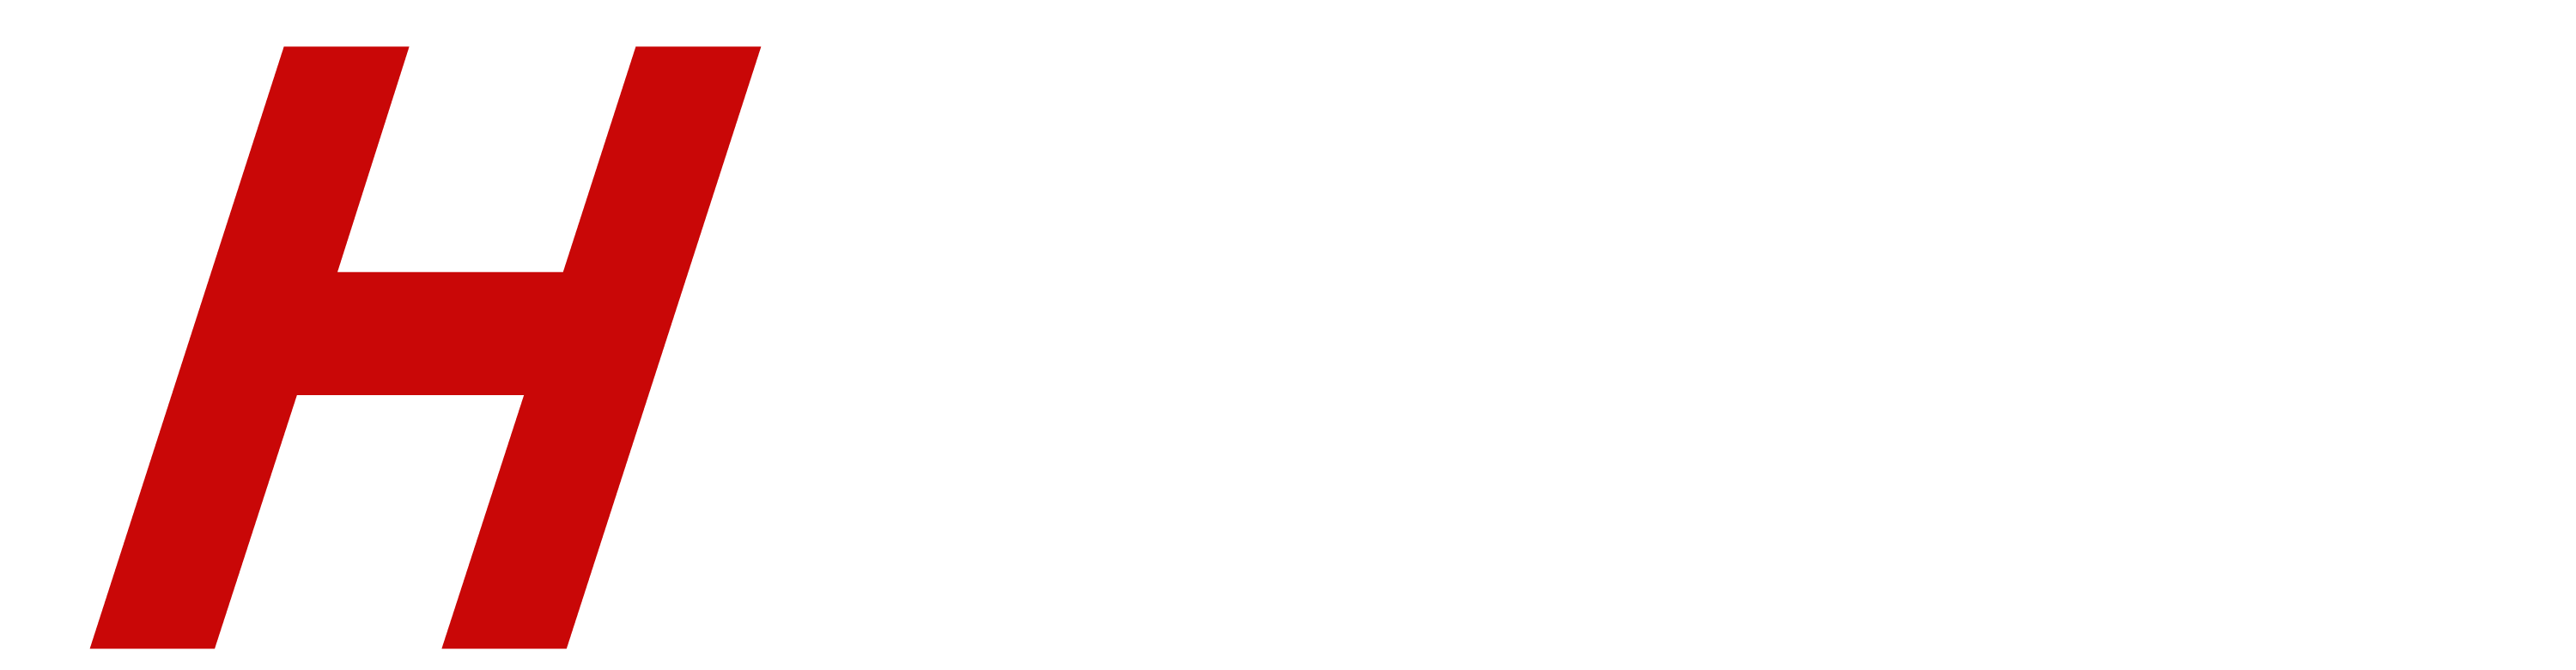 hzila logo clothing - brand